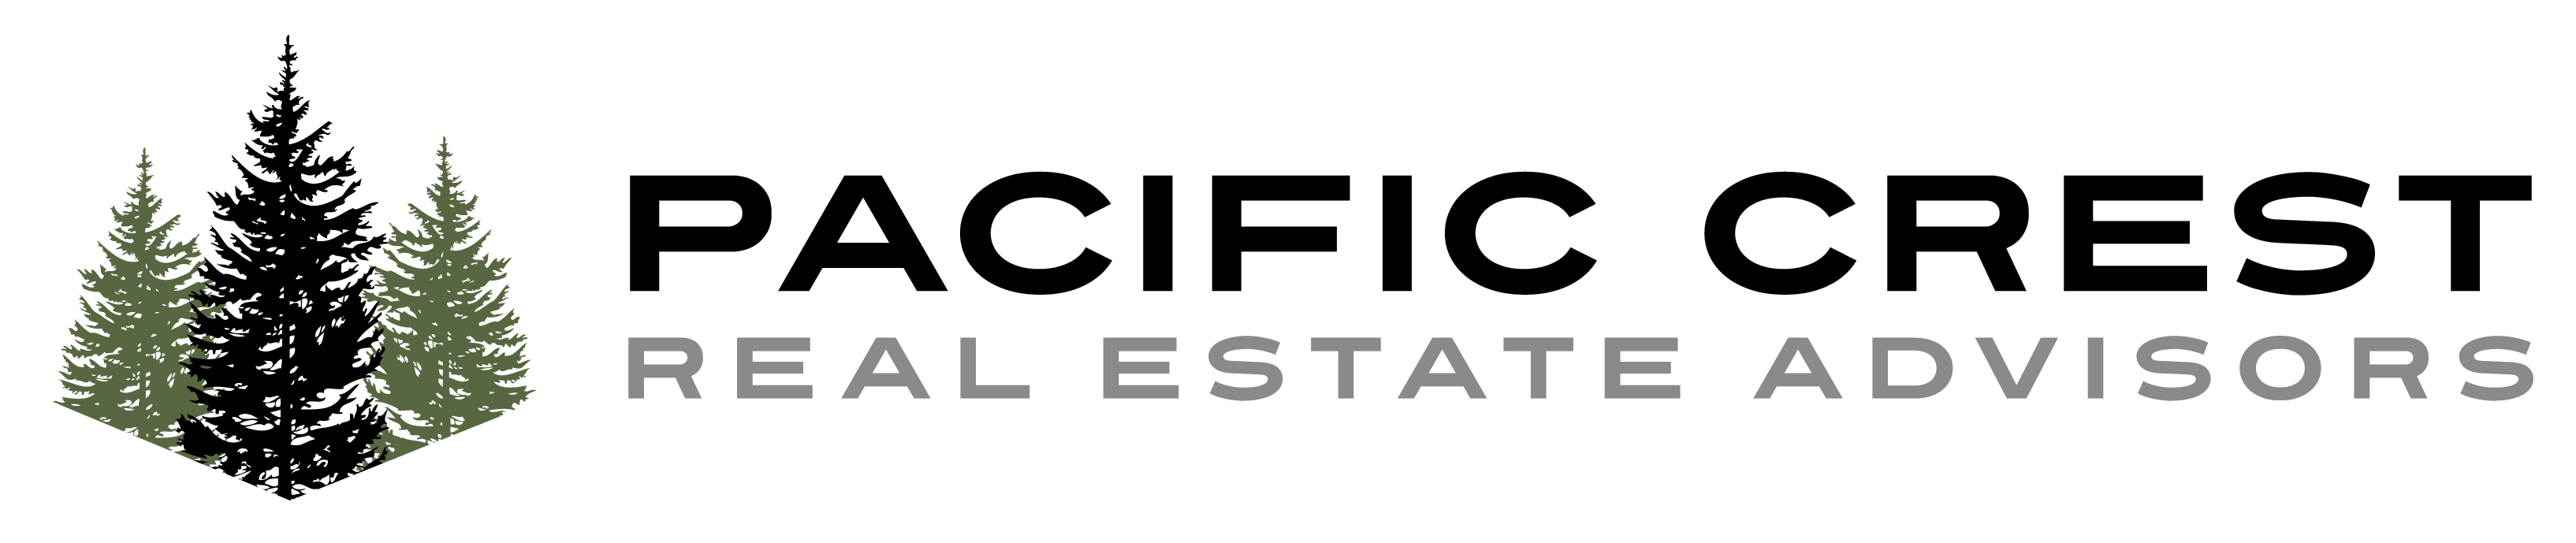 Pacific Crest Real Estate Advisors